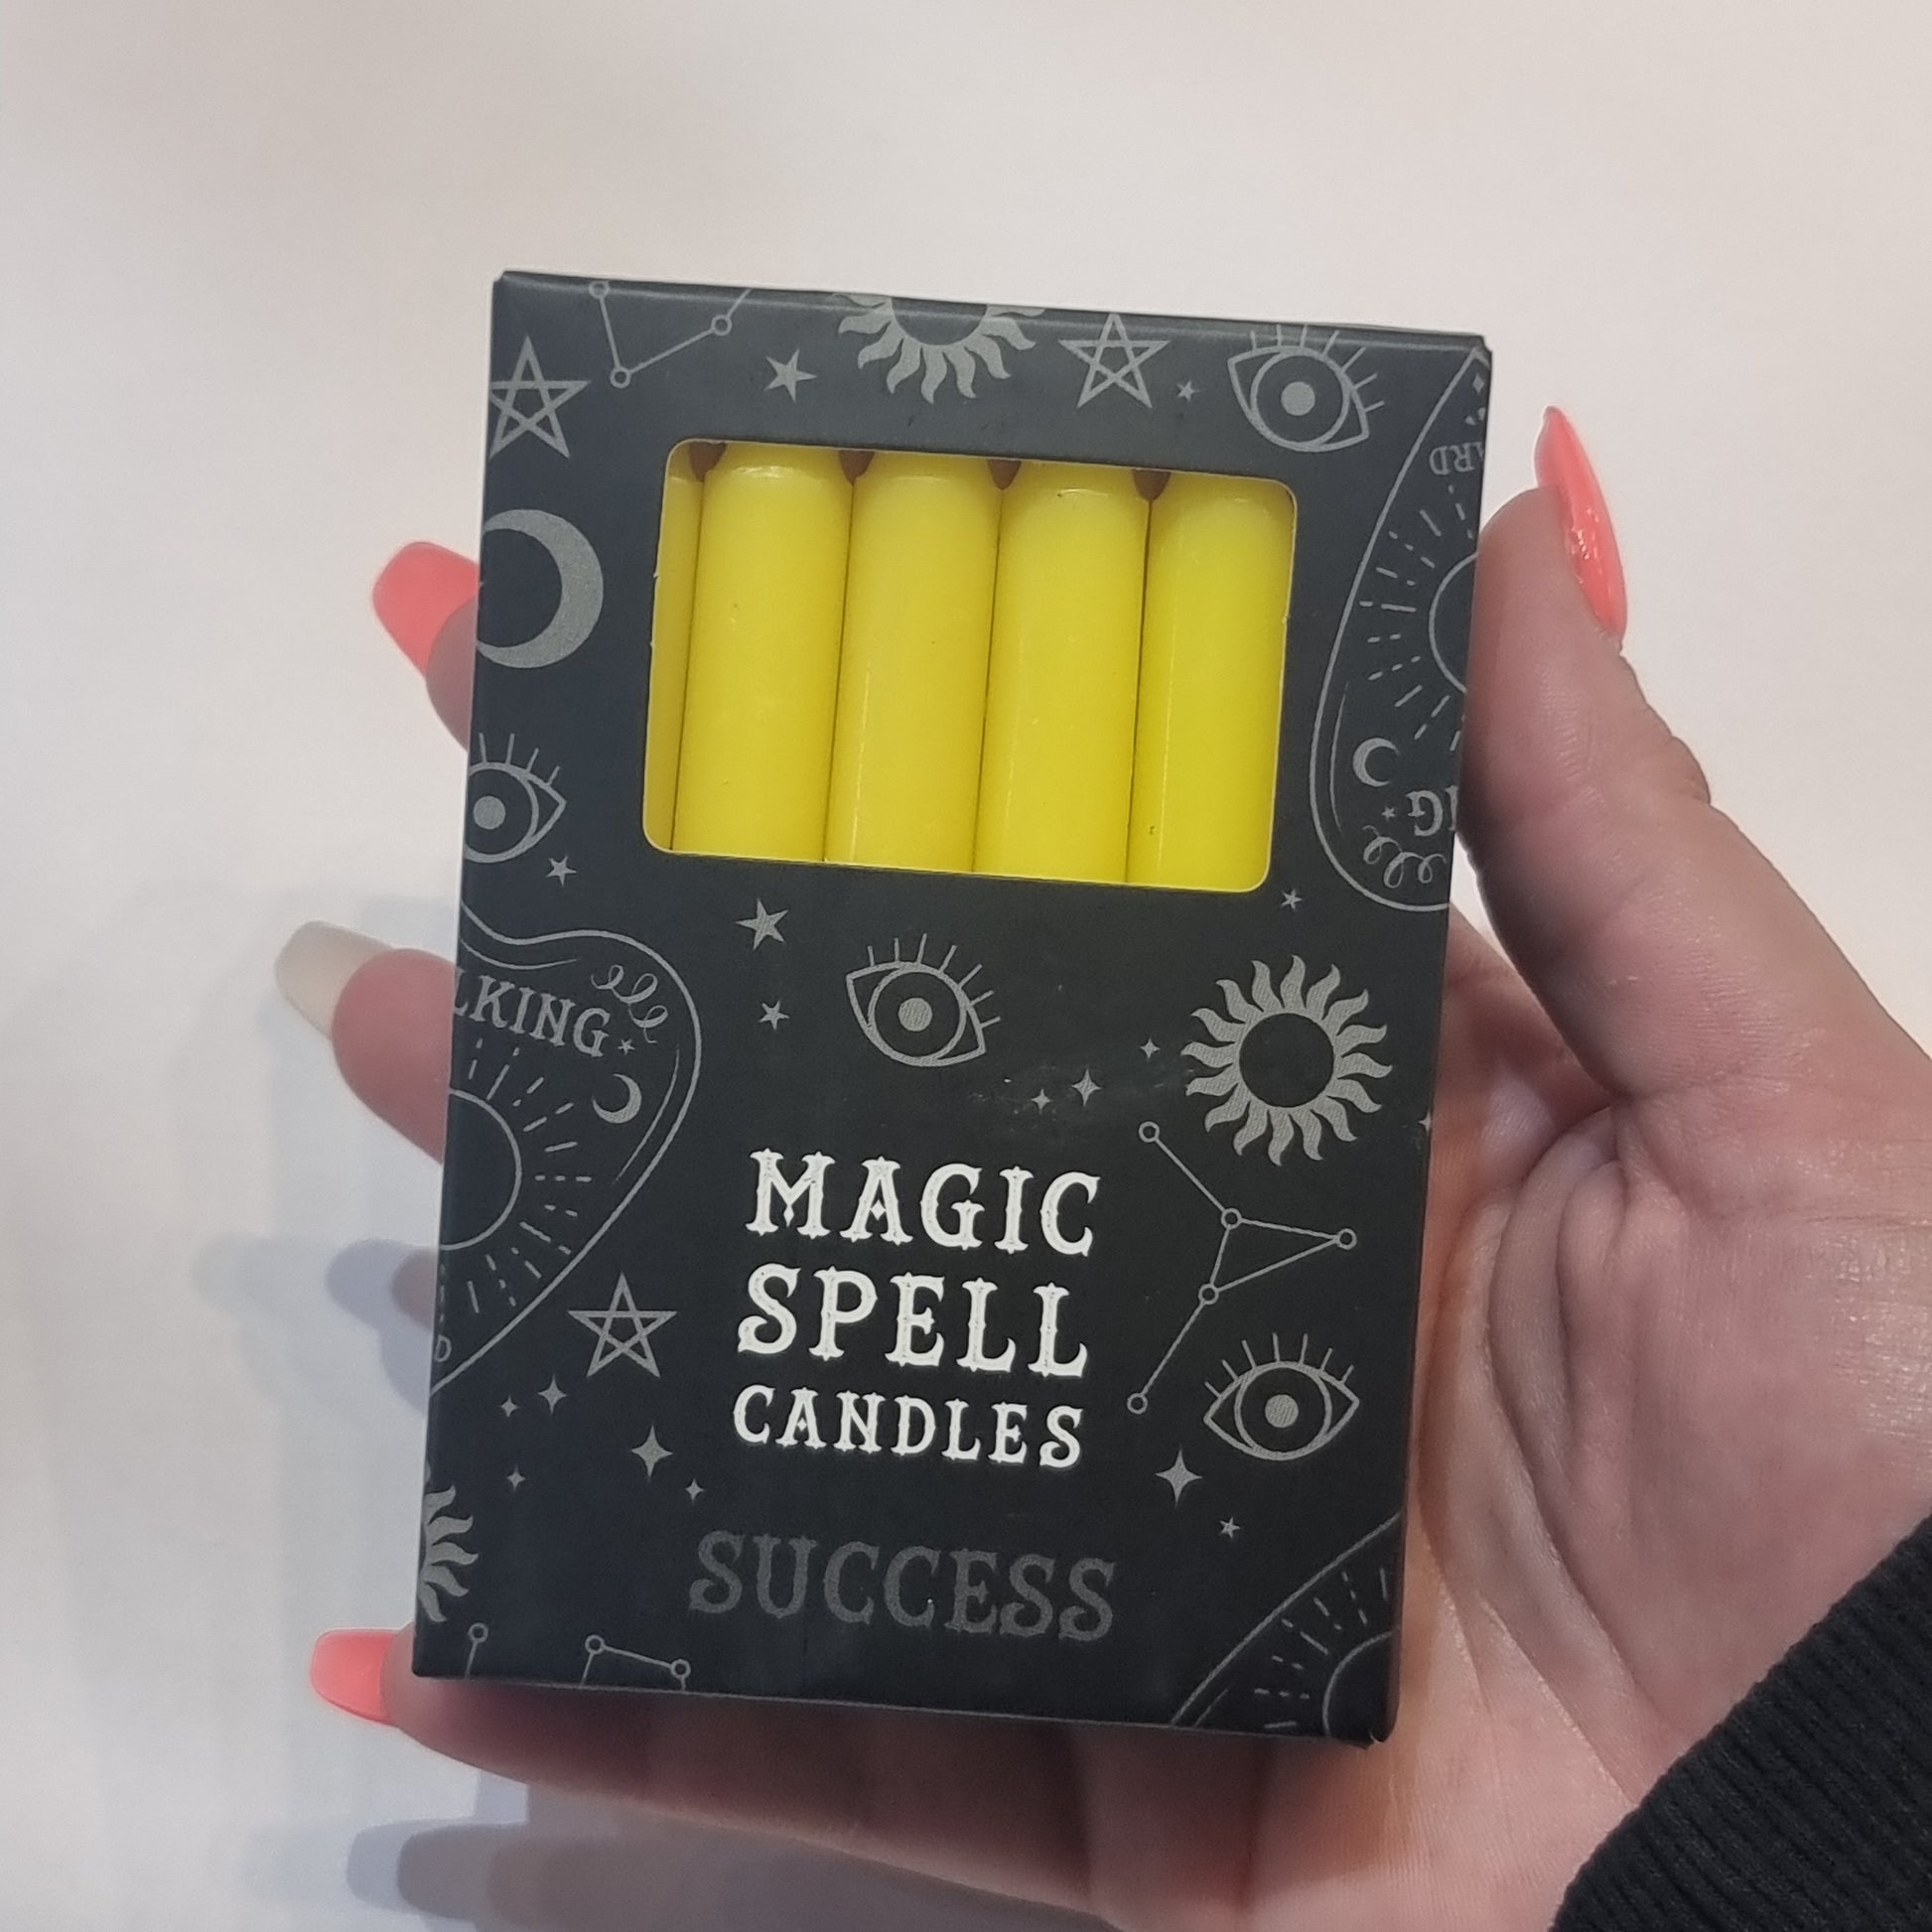 Magic spell candles - success - Rivendell Shop